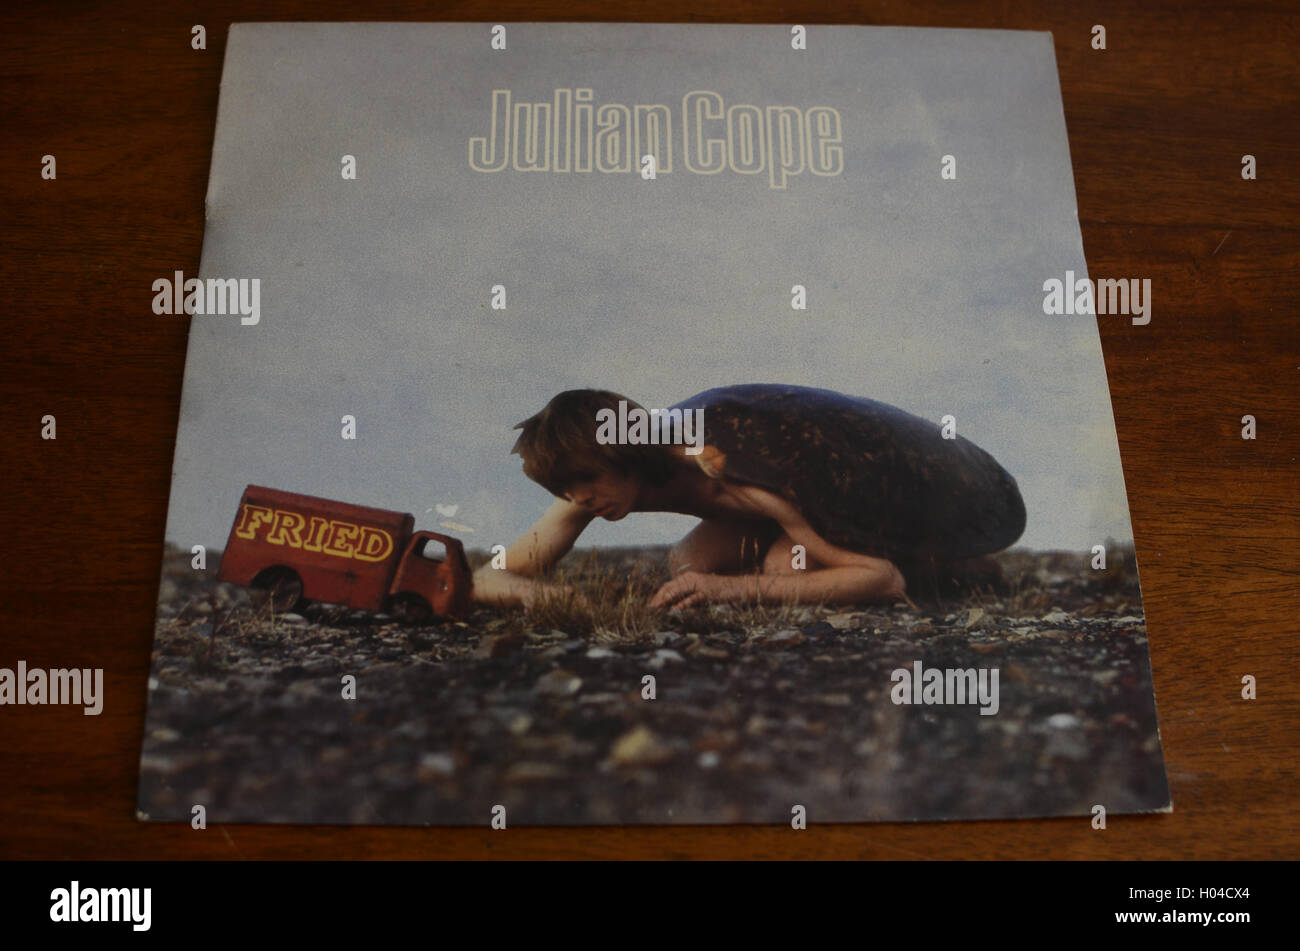 Julian Cope, Fried, album, vinyl, 12', Teardrop Explodes Stock Photo